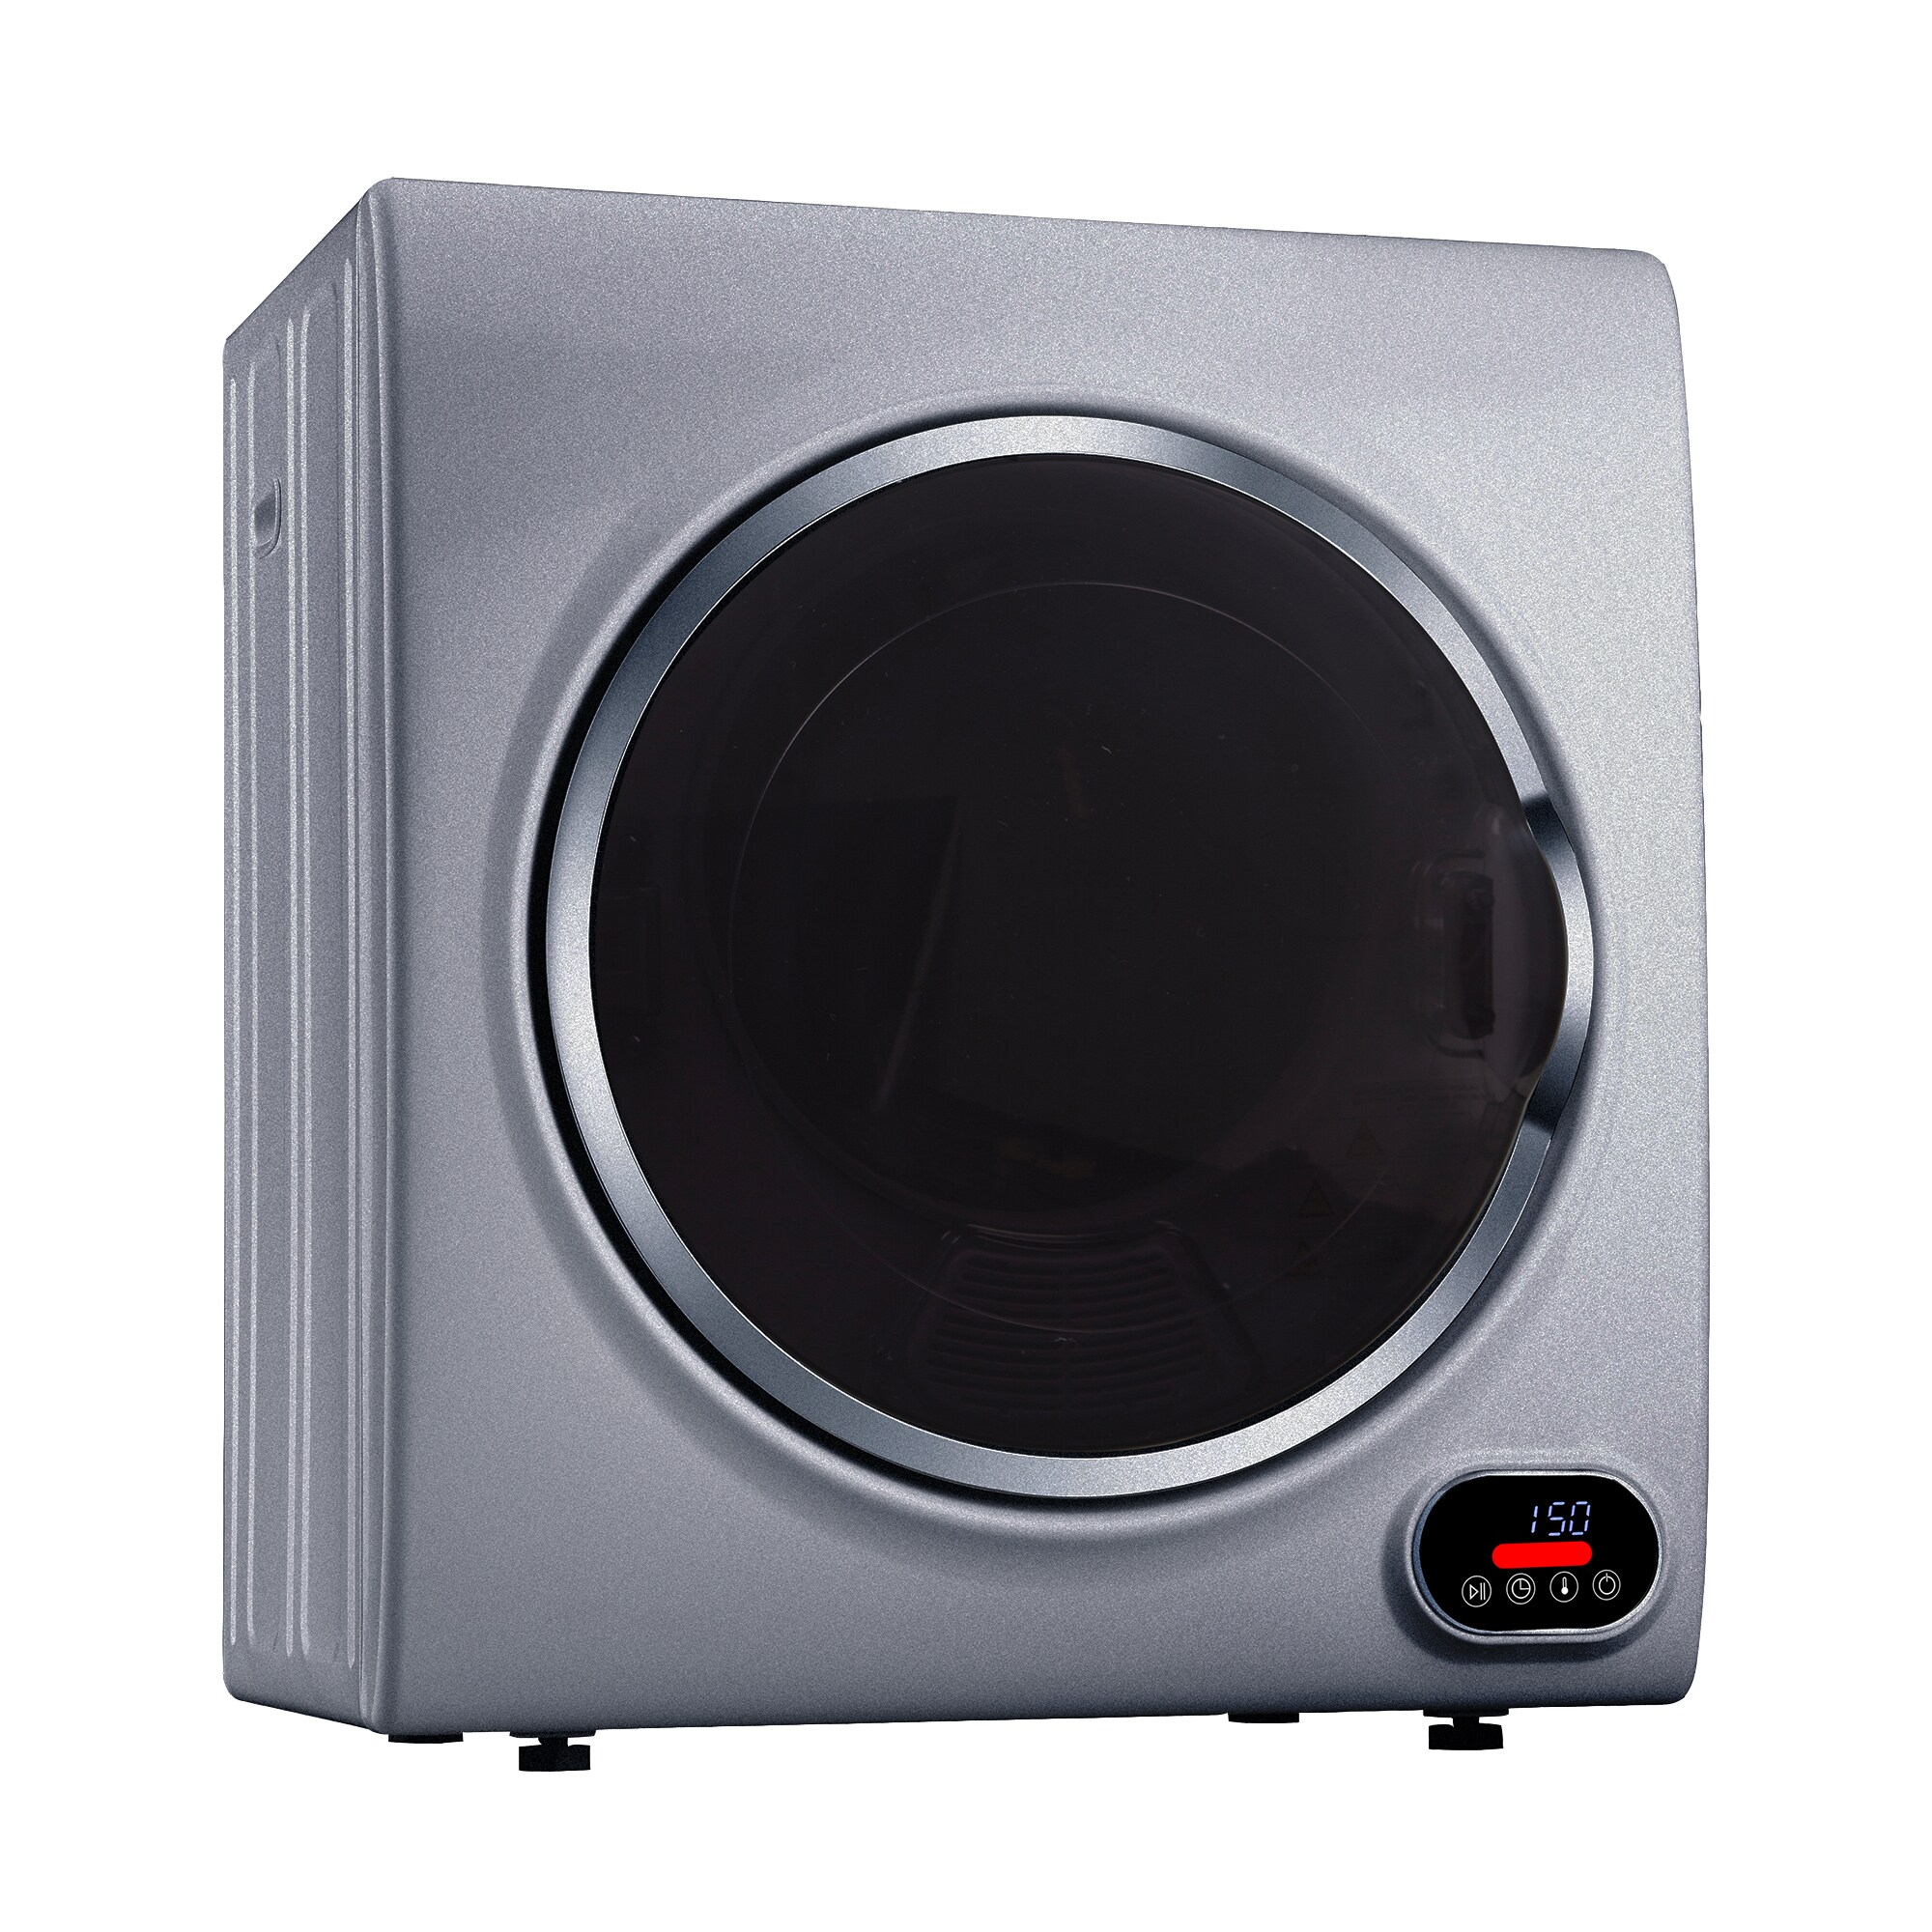 VIRUBI 3.23 Cubic Feet High Efficiency Electric Stackable Dryer